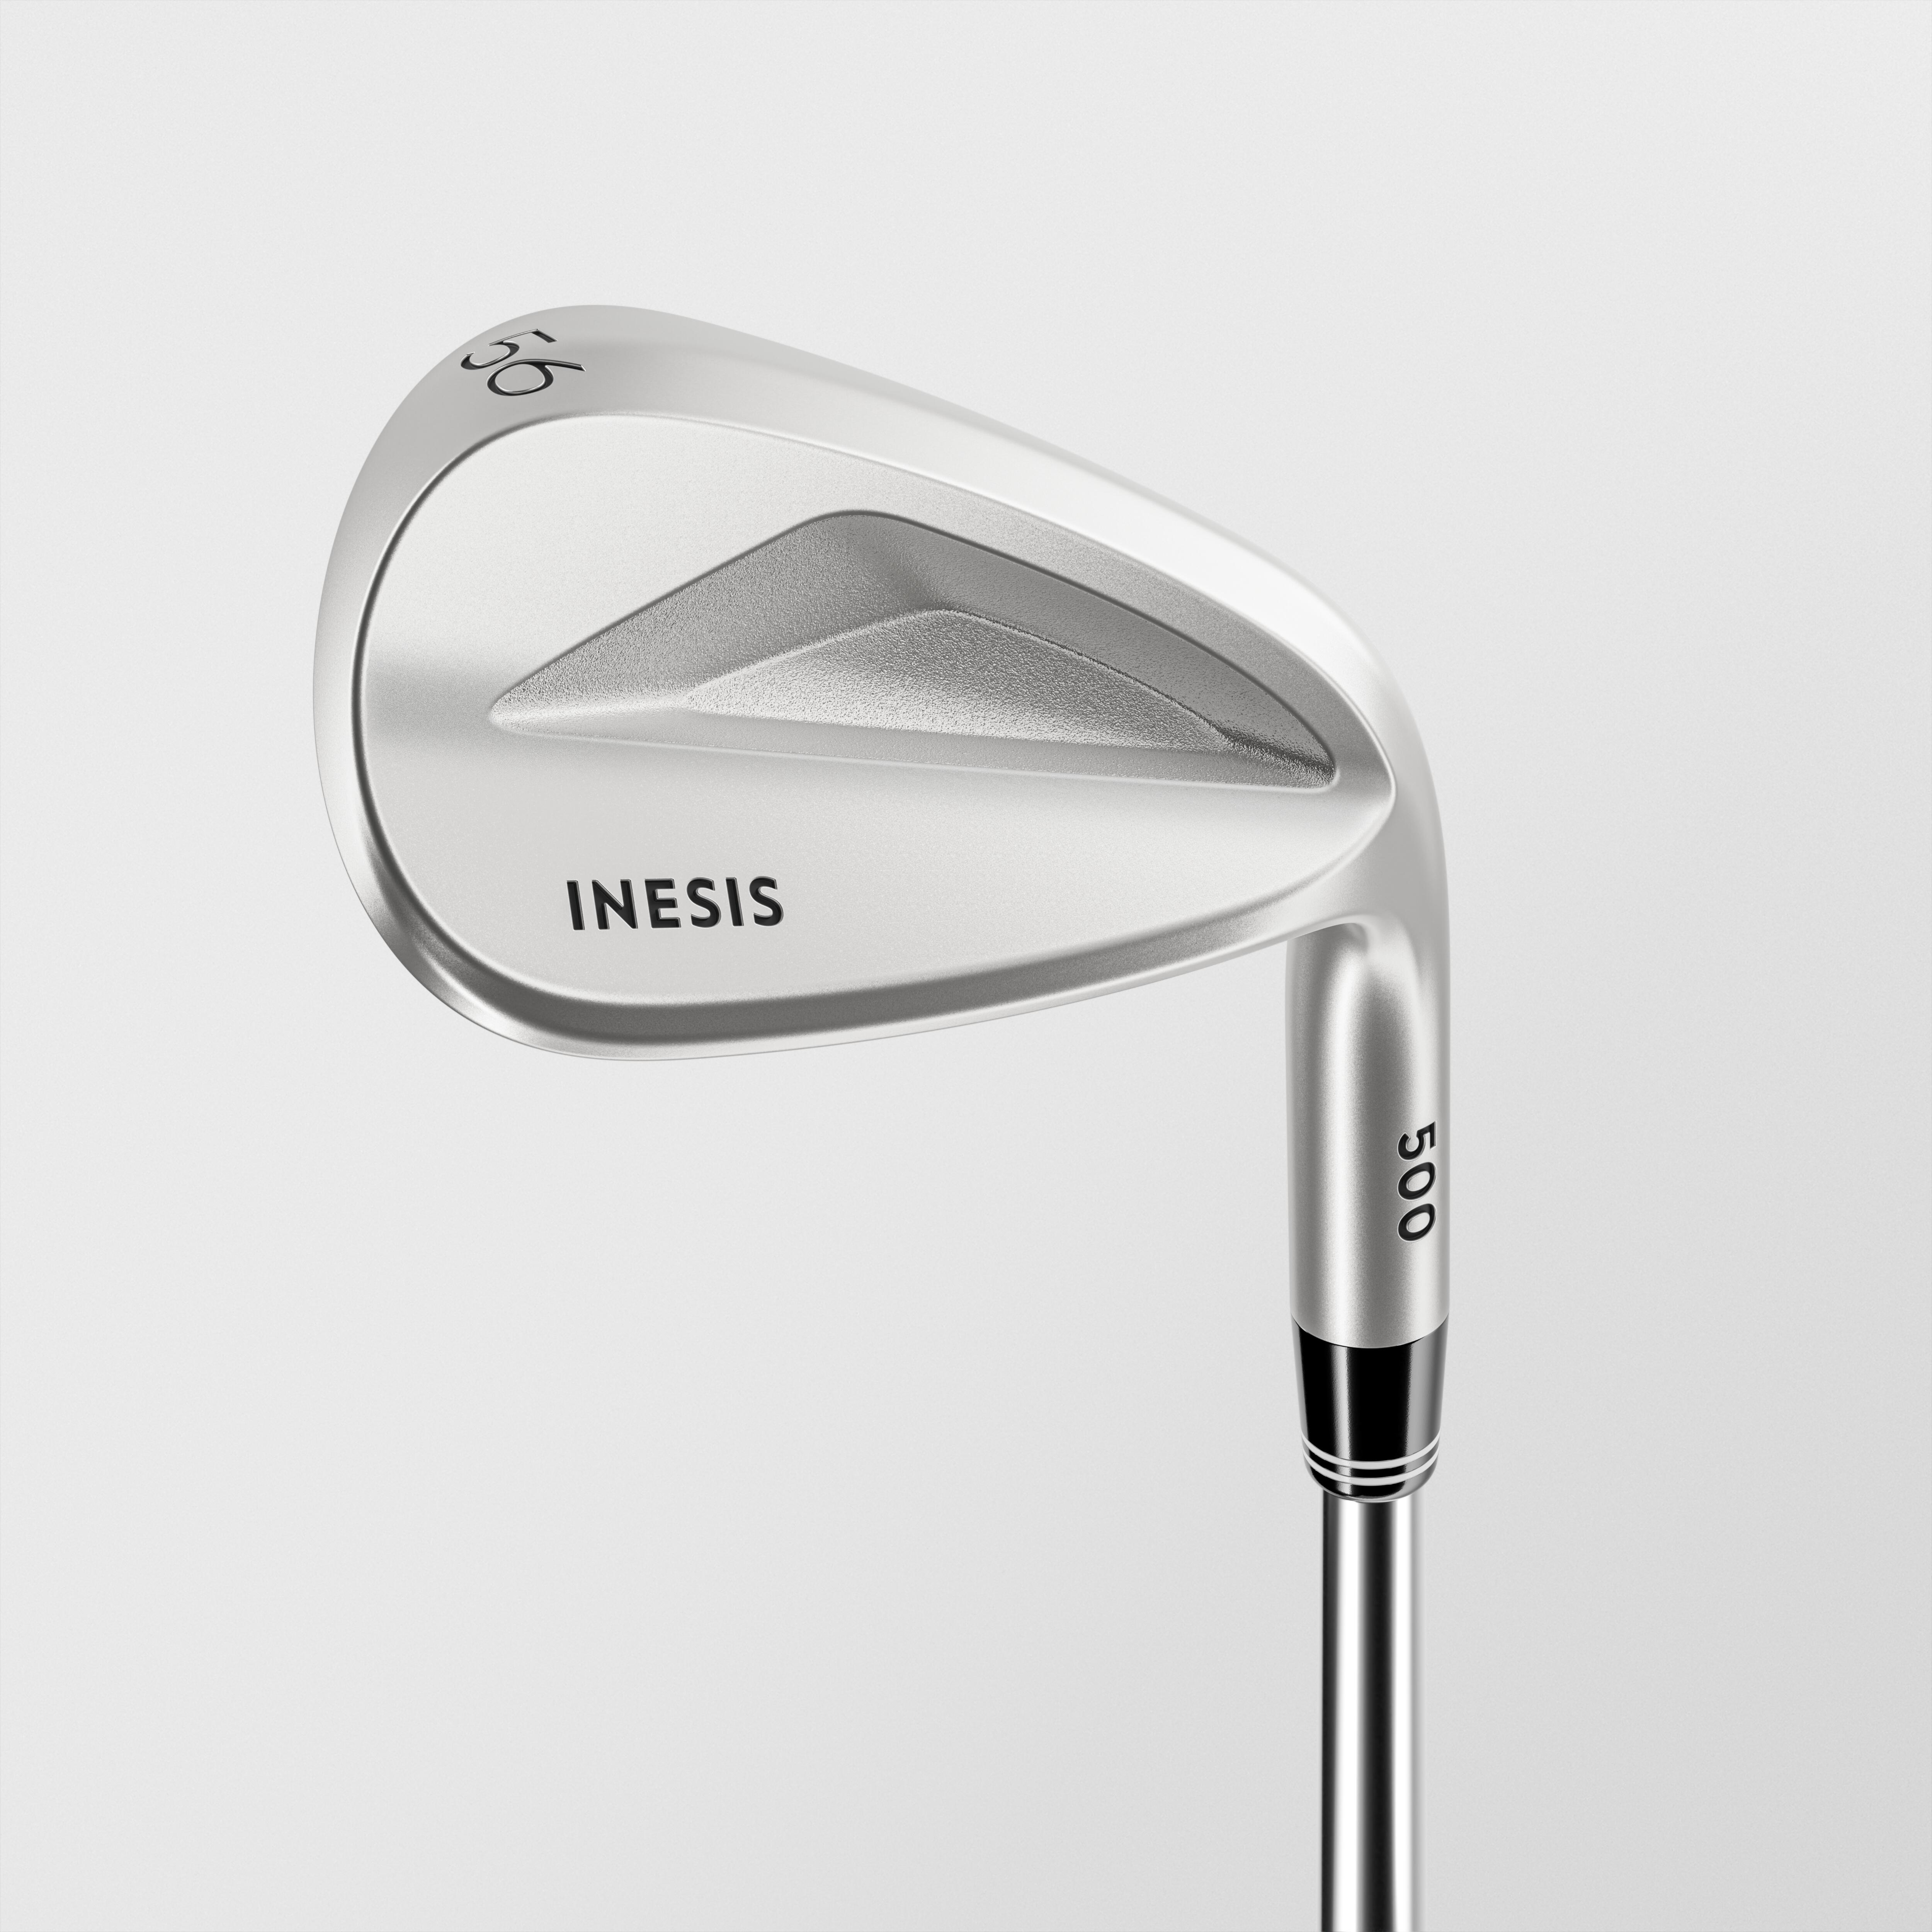 RH Golf Wedge - Inesis 500 Size 2 Steel